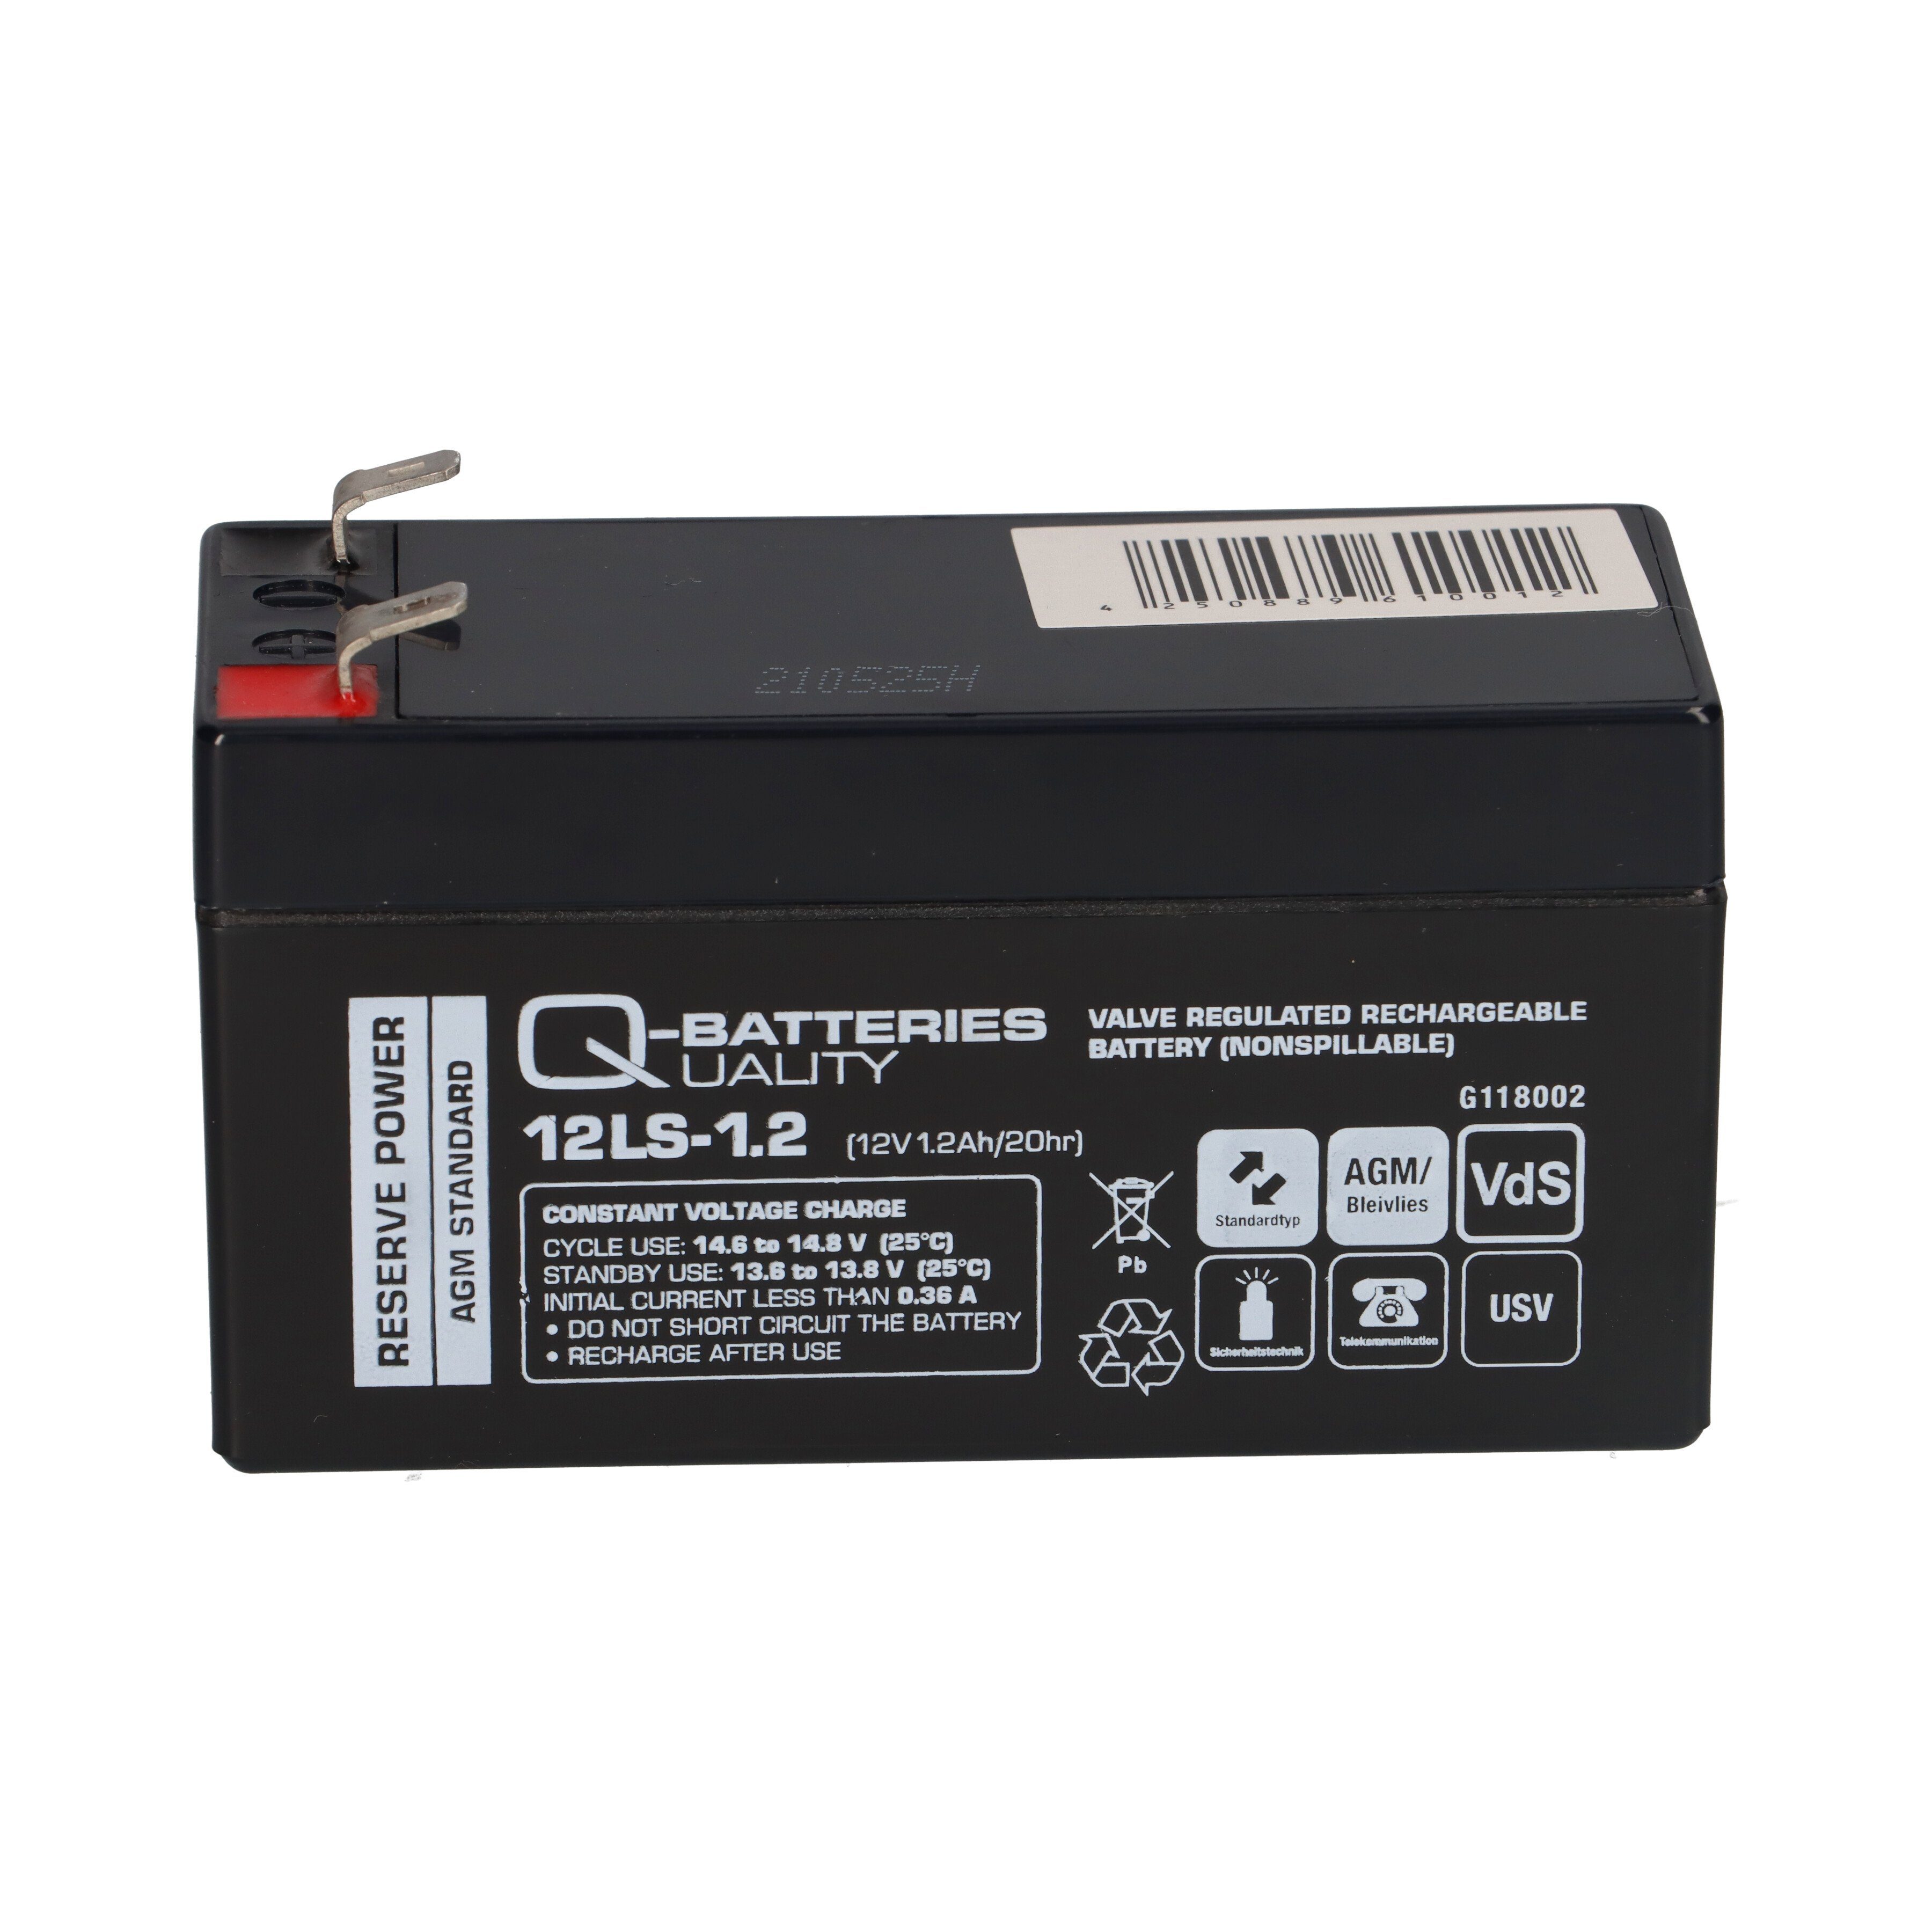 Blei-Vlies VdS 12V 1,2Ah Bleiakkus Q-Batteries 12LS-1.2 VRLA Q-Batteries Akku AGM / mit